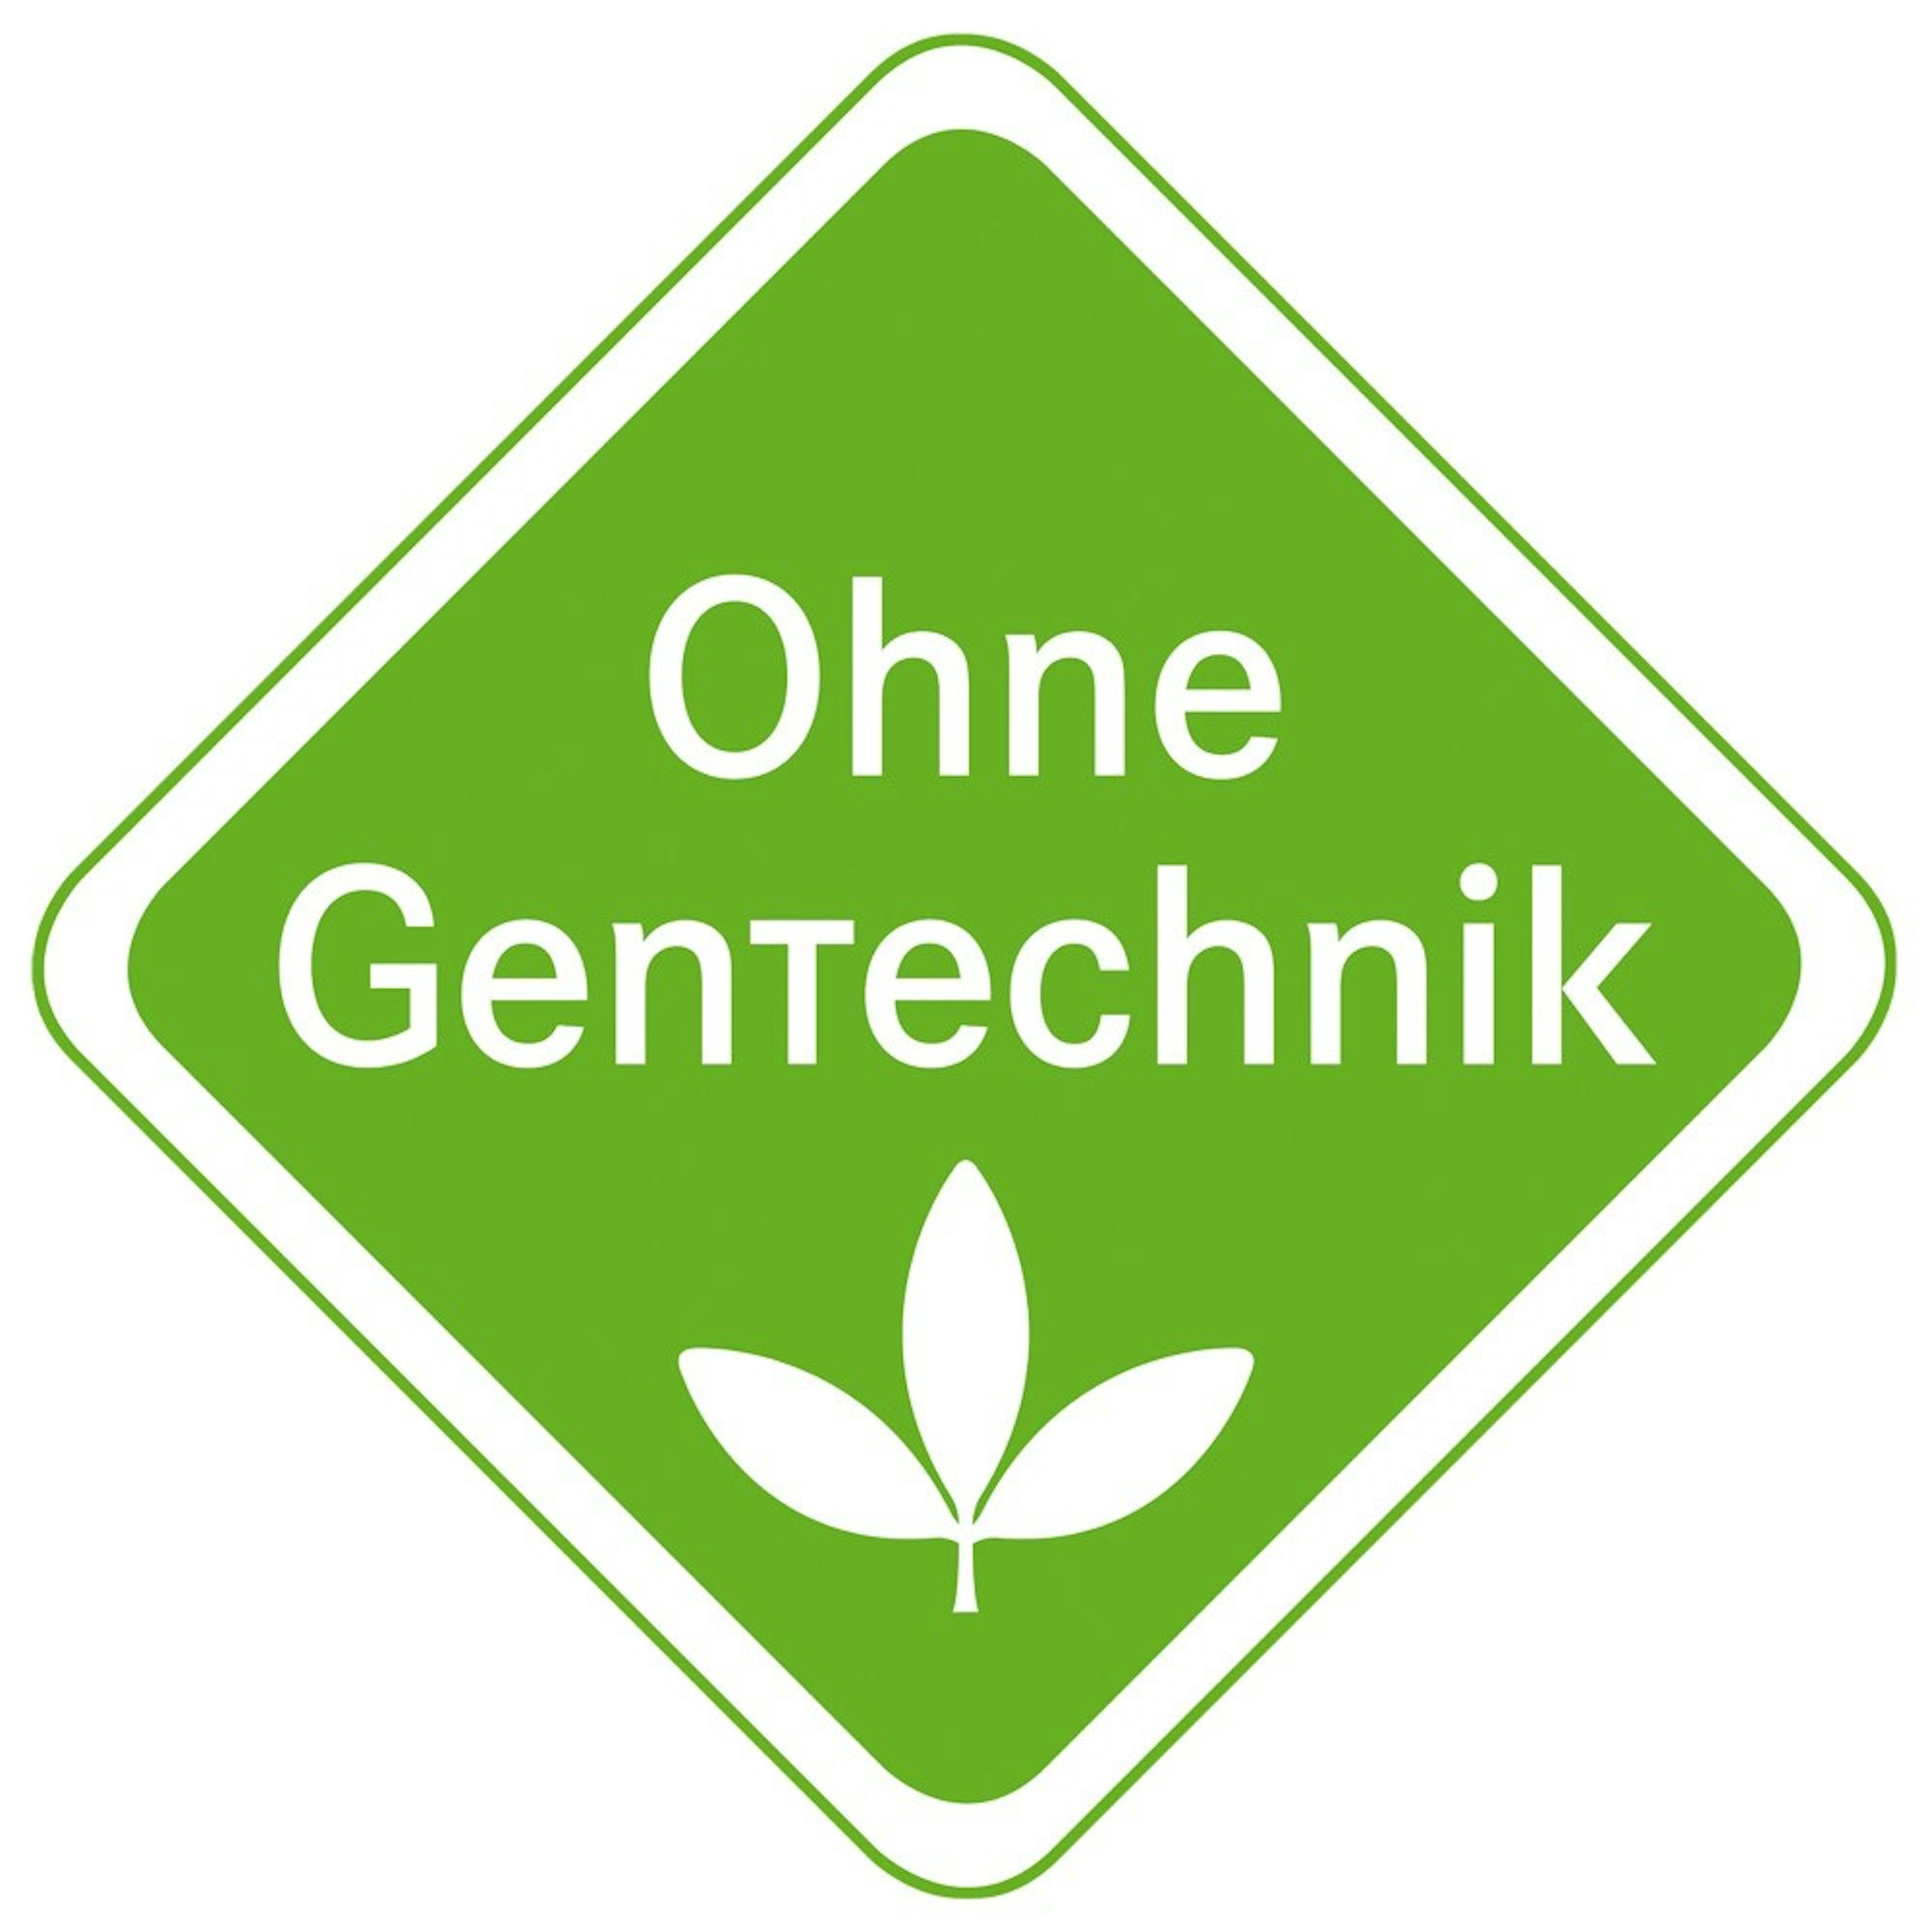 Ohne_Gentechnik_31012020